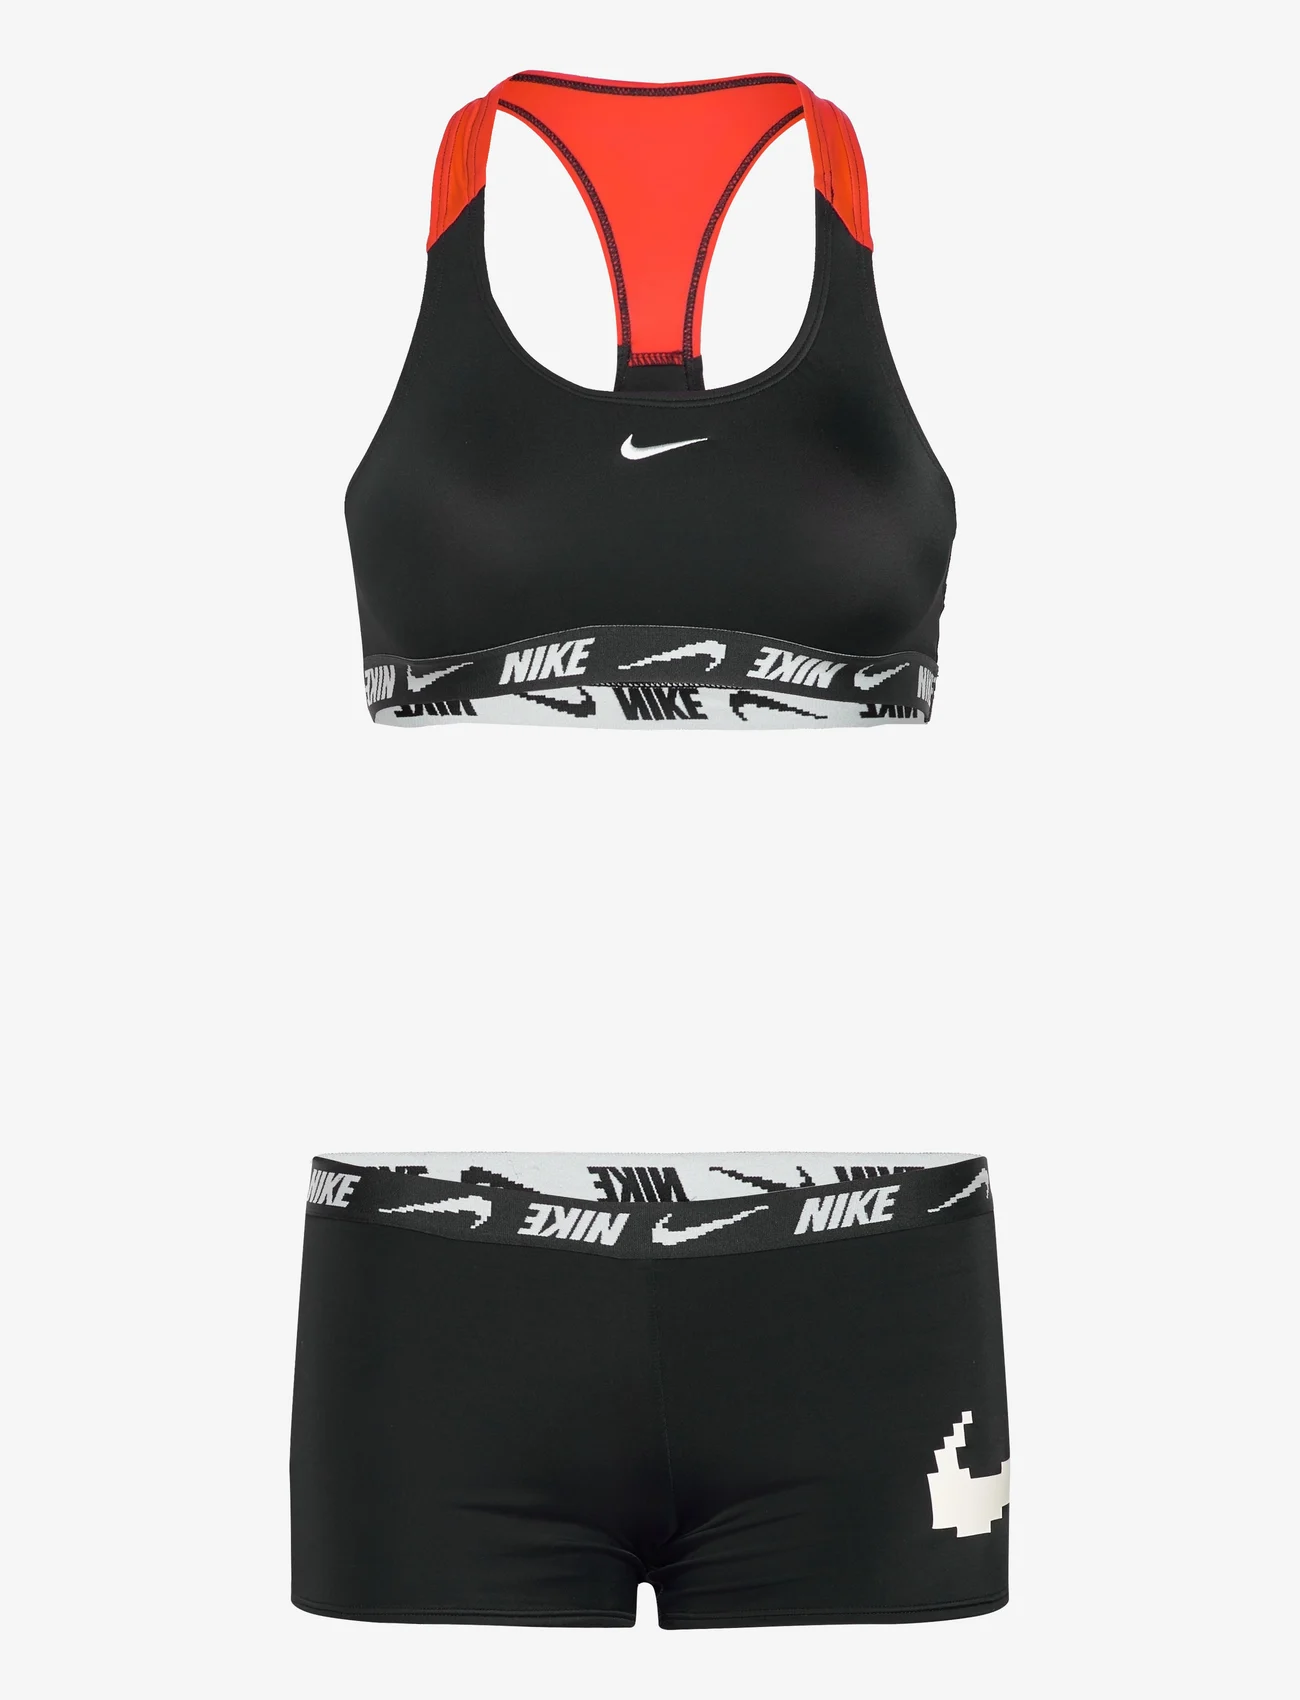 NIKE SWIM - Nike G Racerback Bikini Set - zomerkoopjes - black - 0